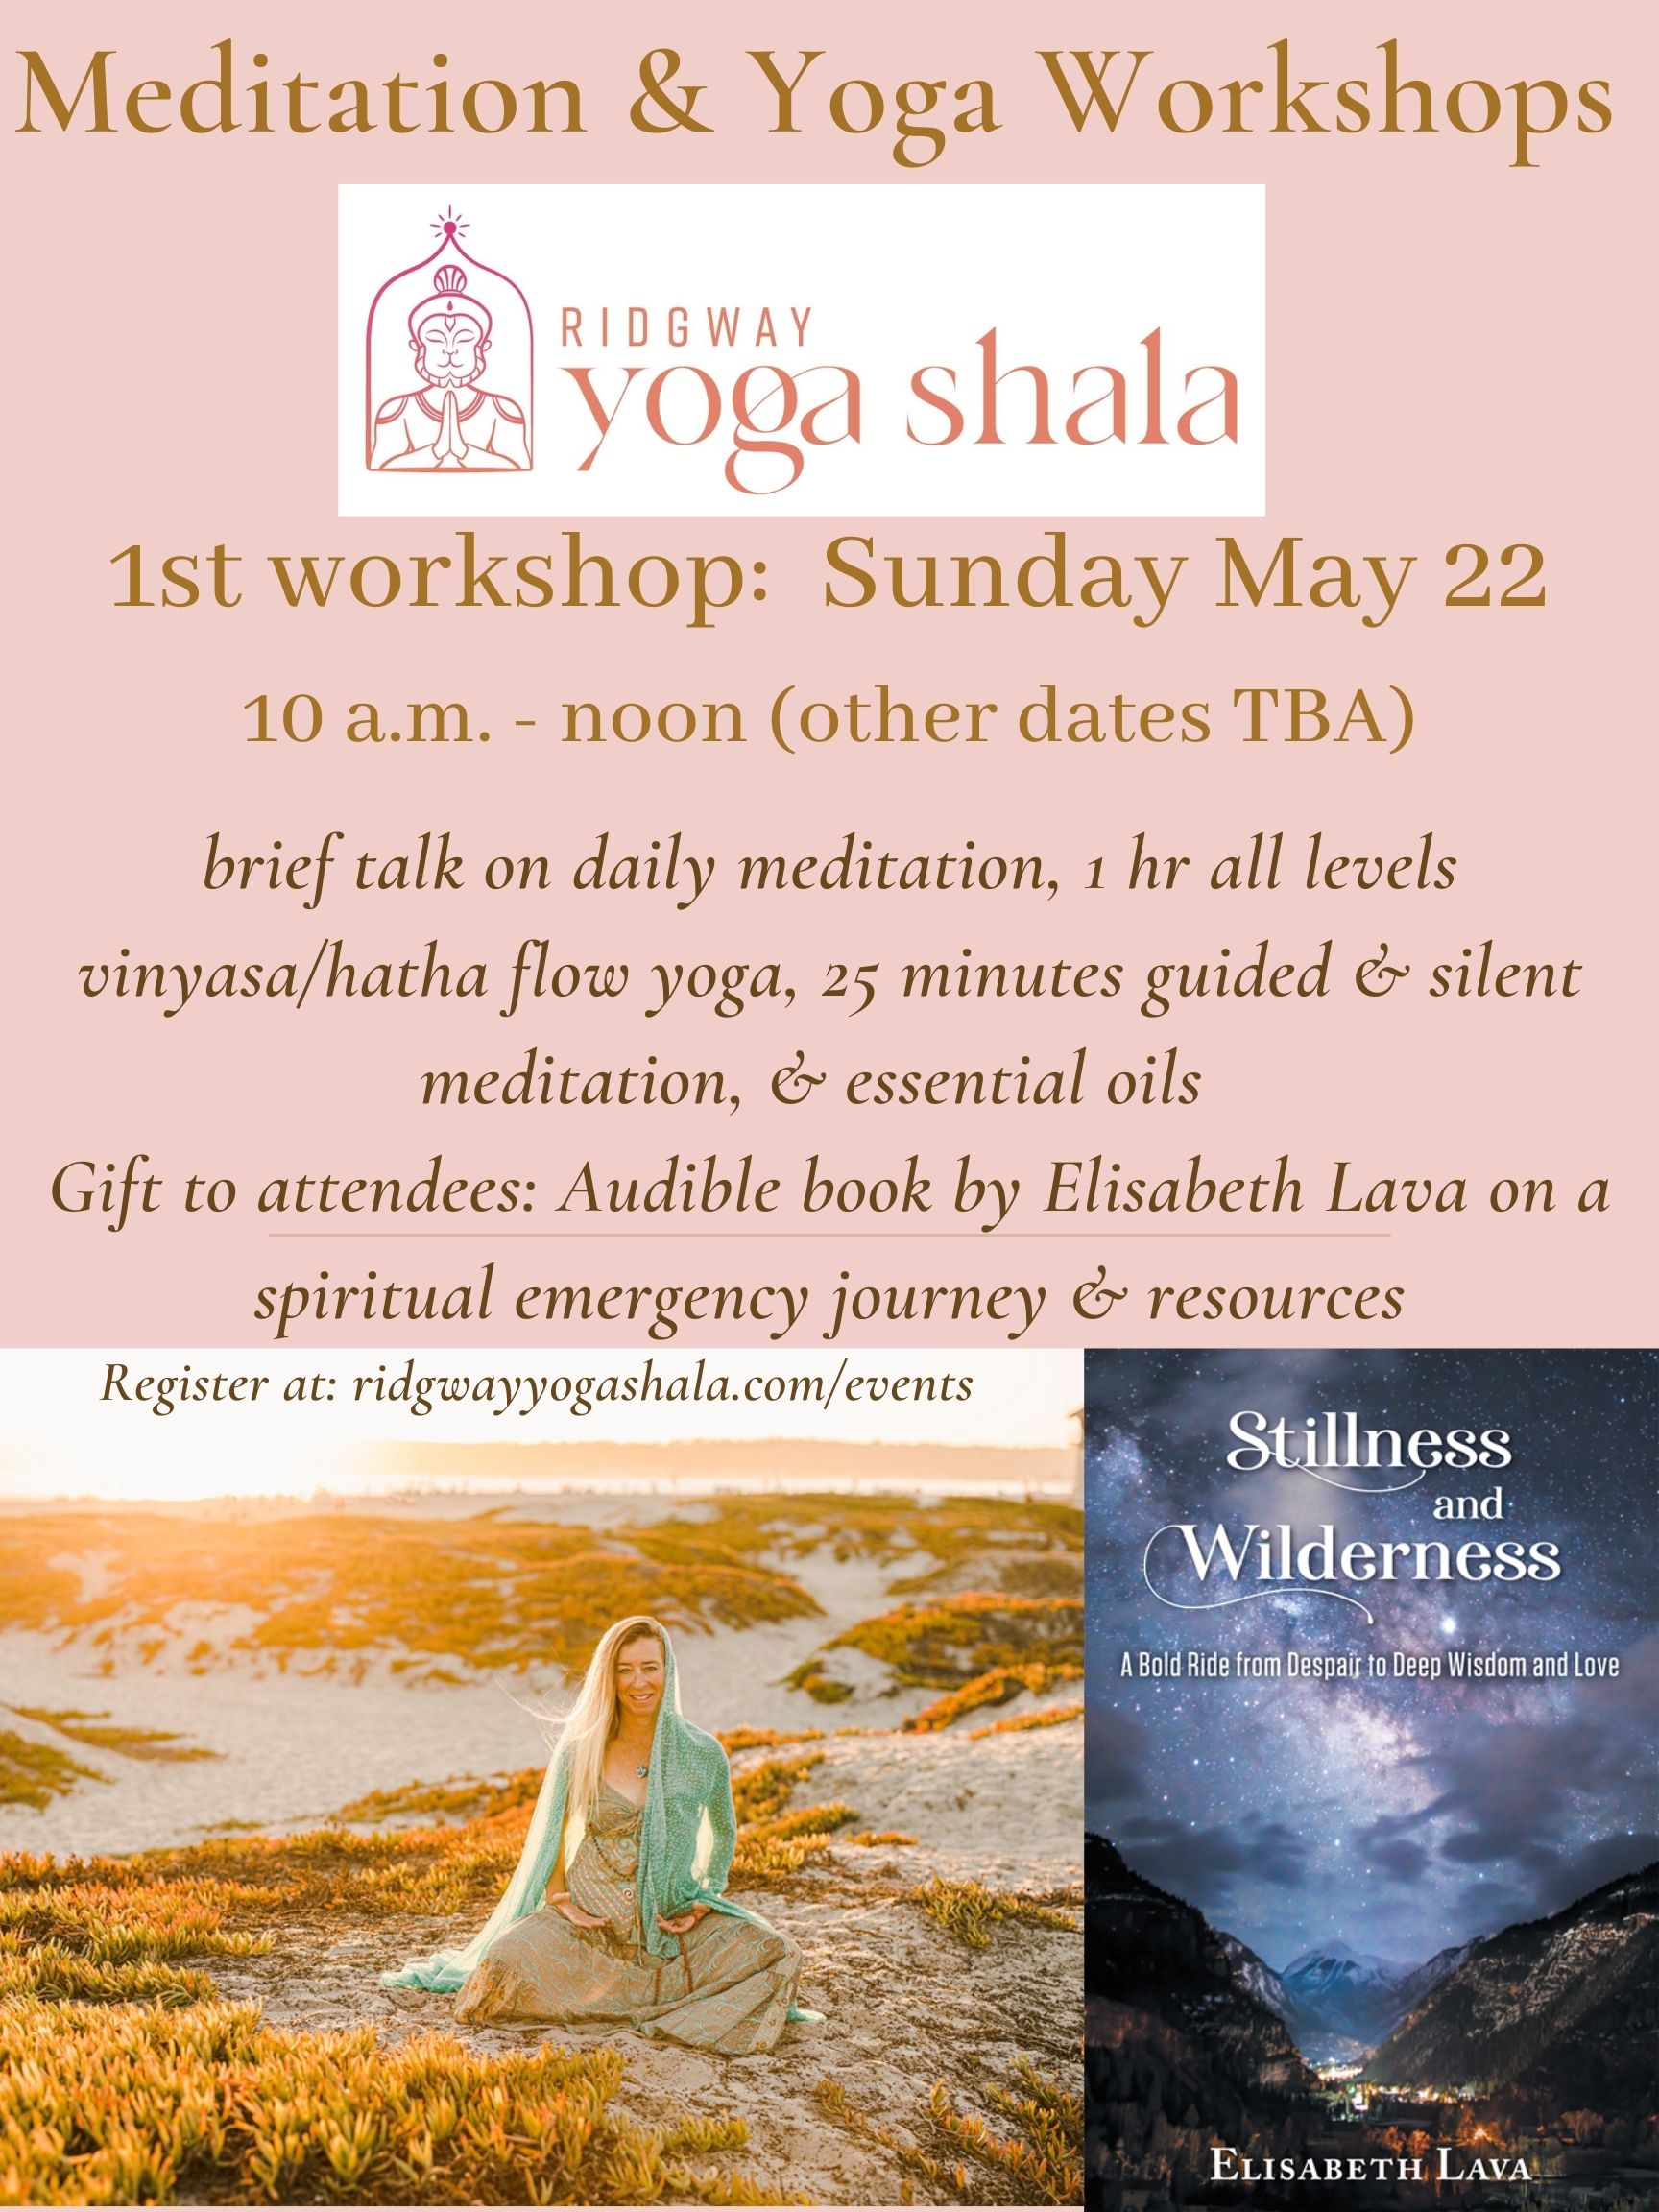 Yoga Shala workshops